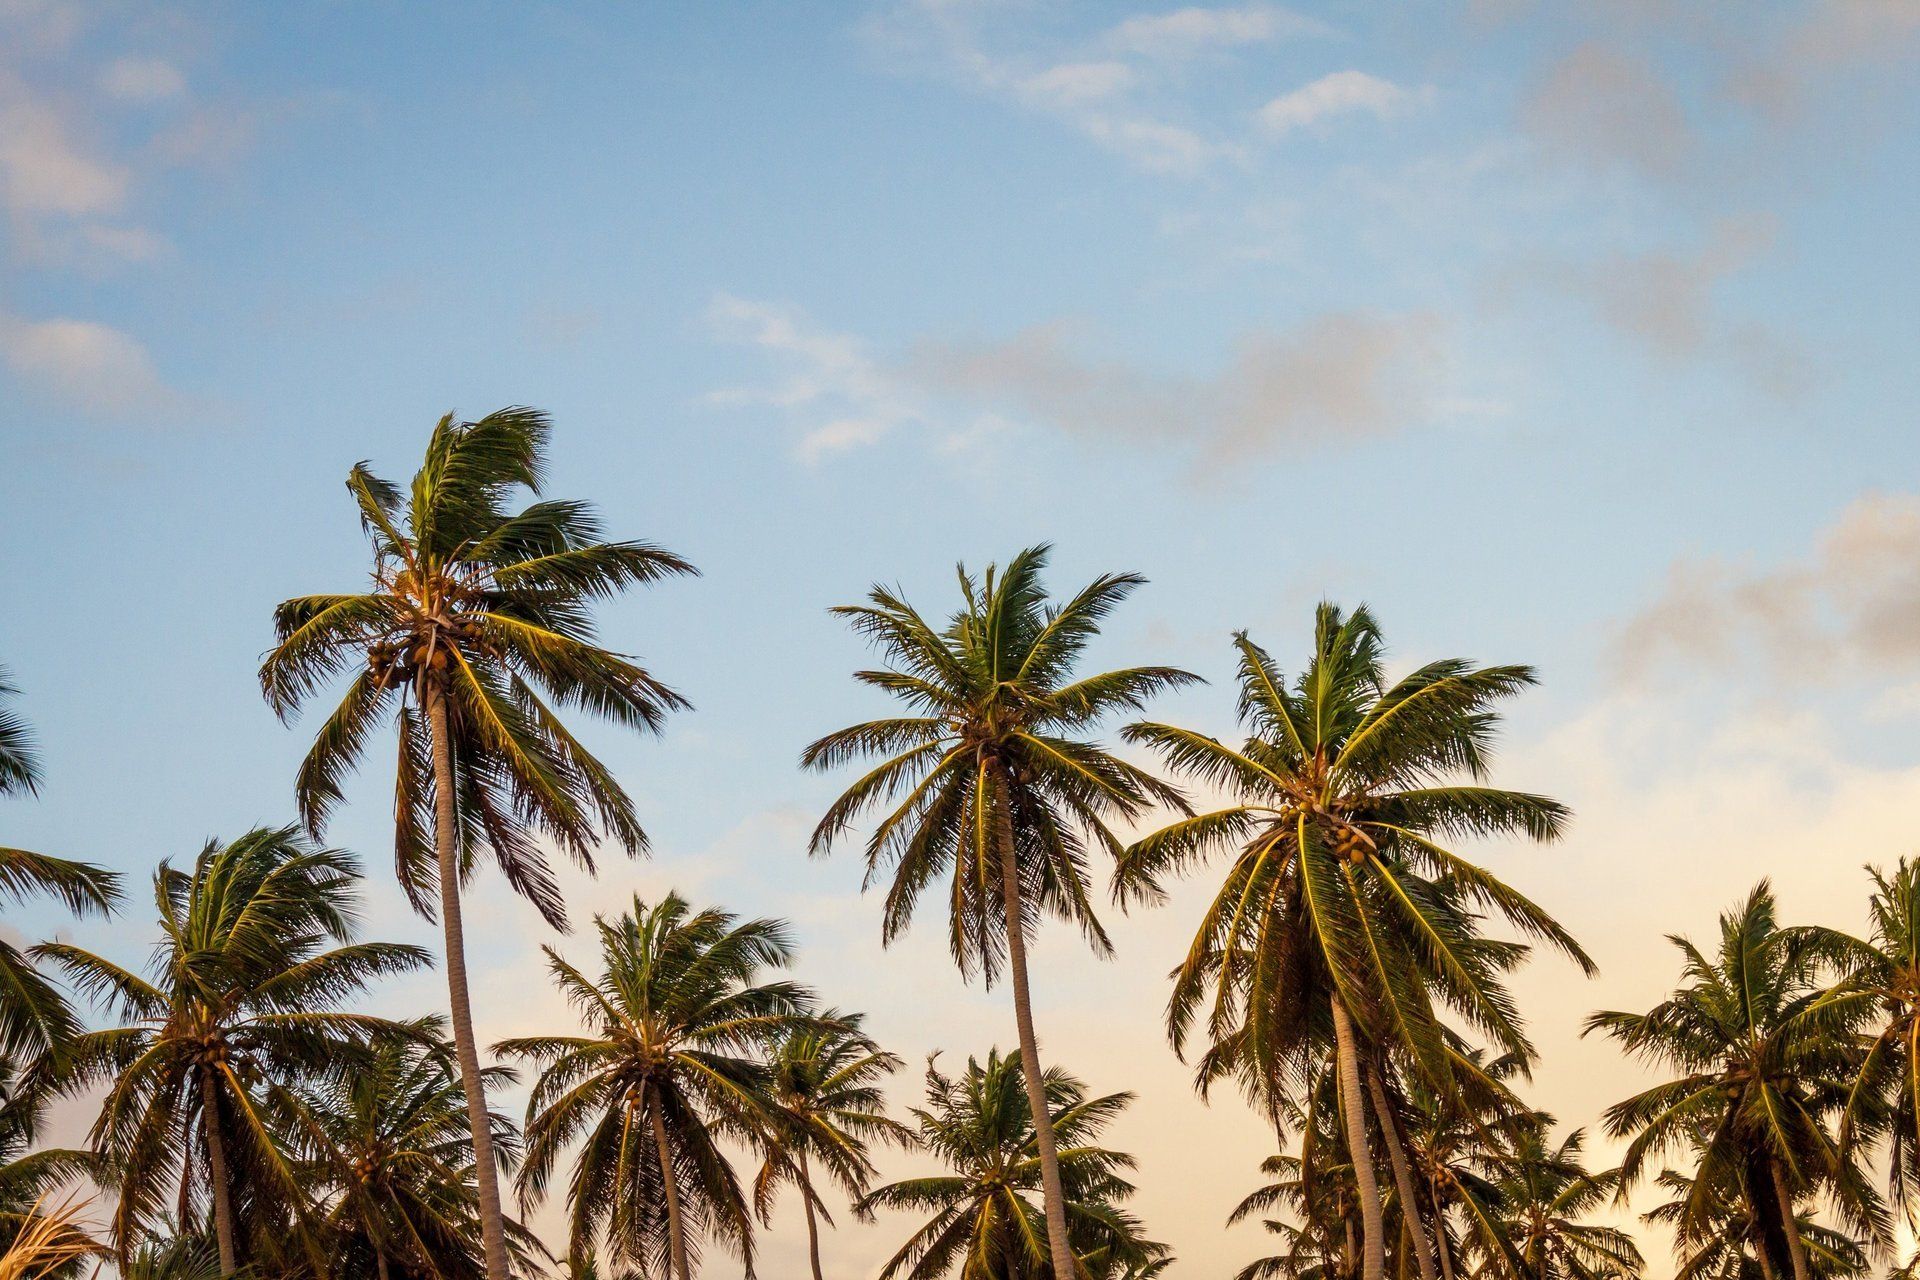 A row of palm trees against a blue sky